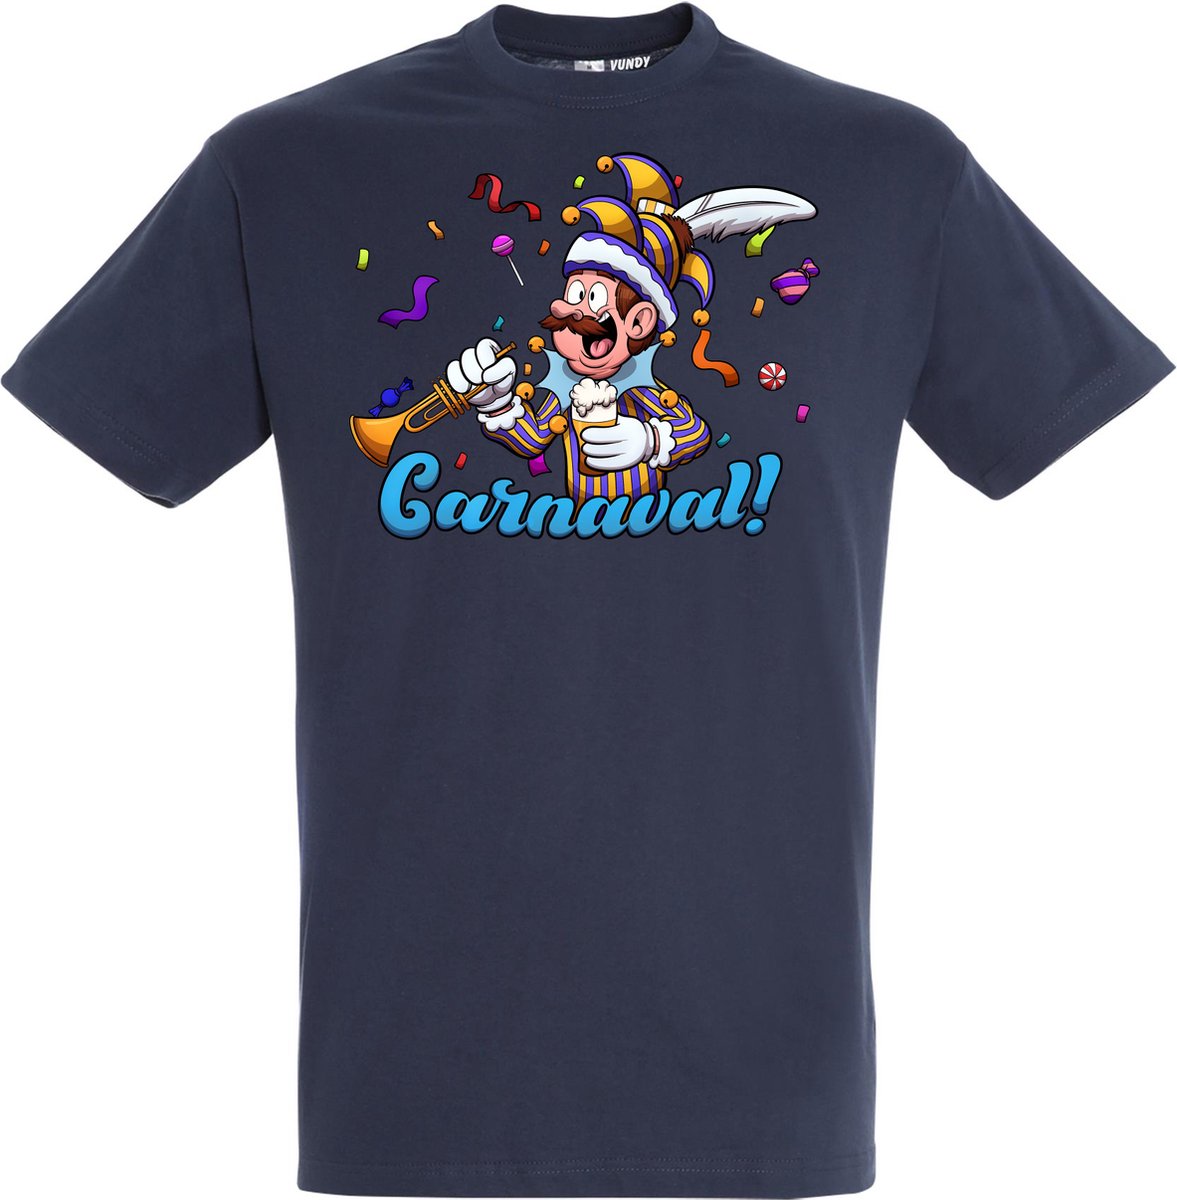 T-shirt kinderen Carnavalluh | Carnaval | Carnavalskleding Kinderen Baby | Navy | maat 104